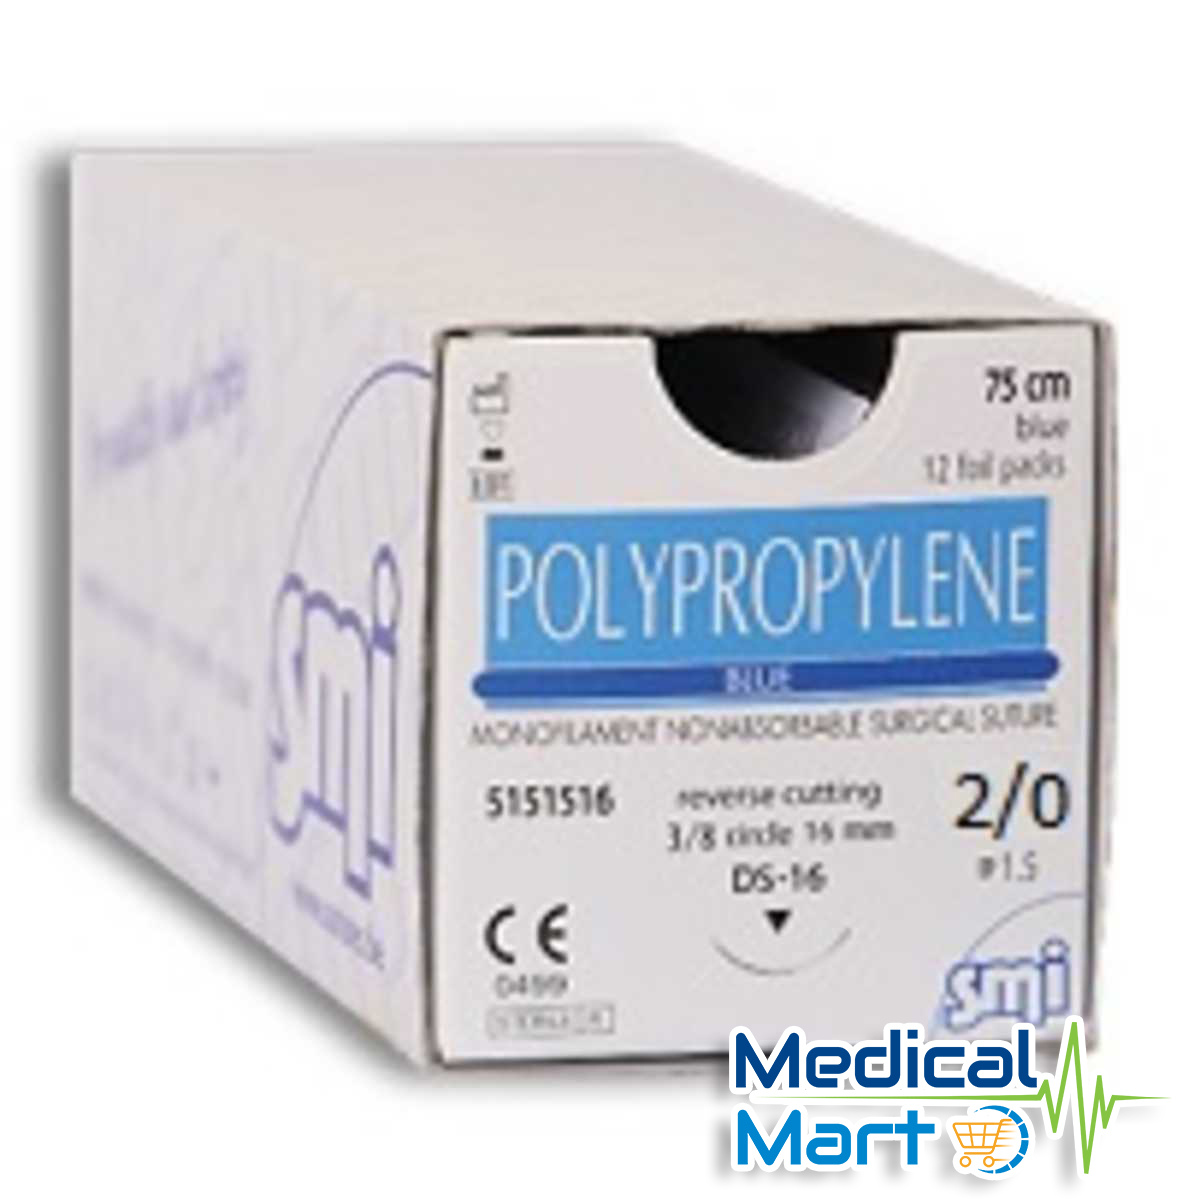 2/0 Polypropylene (Blue), Surgical Suture